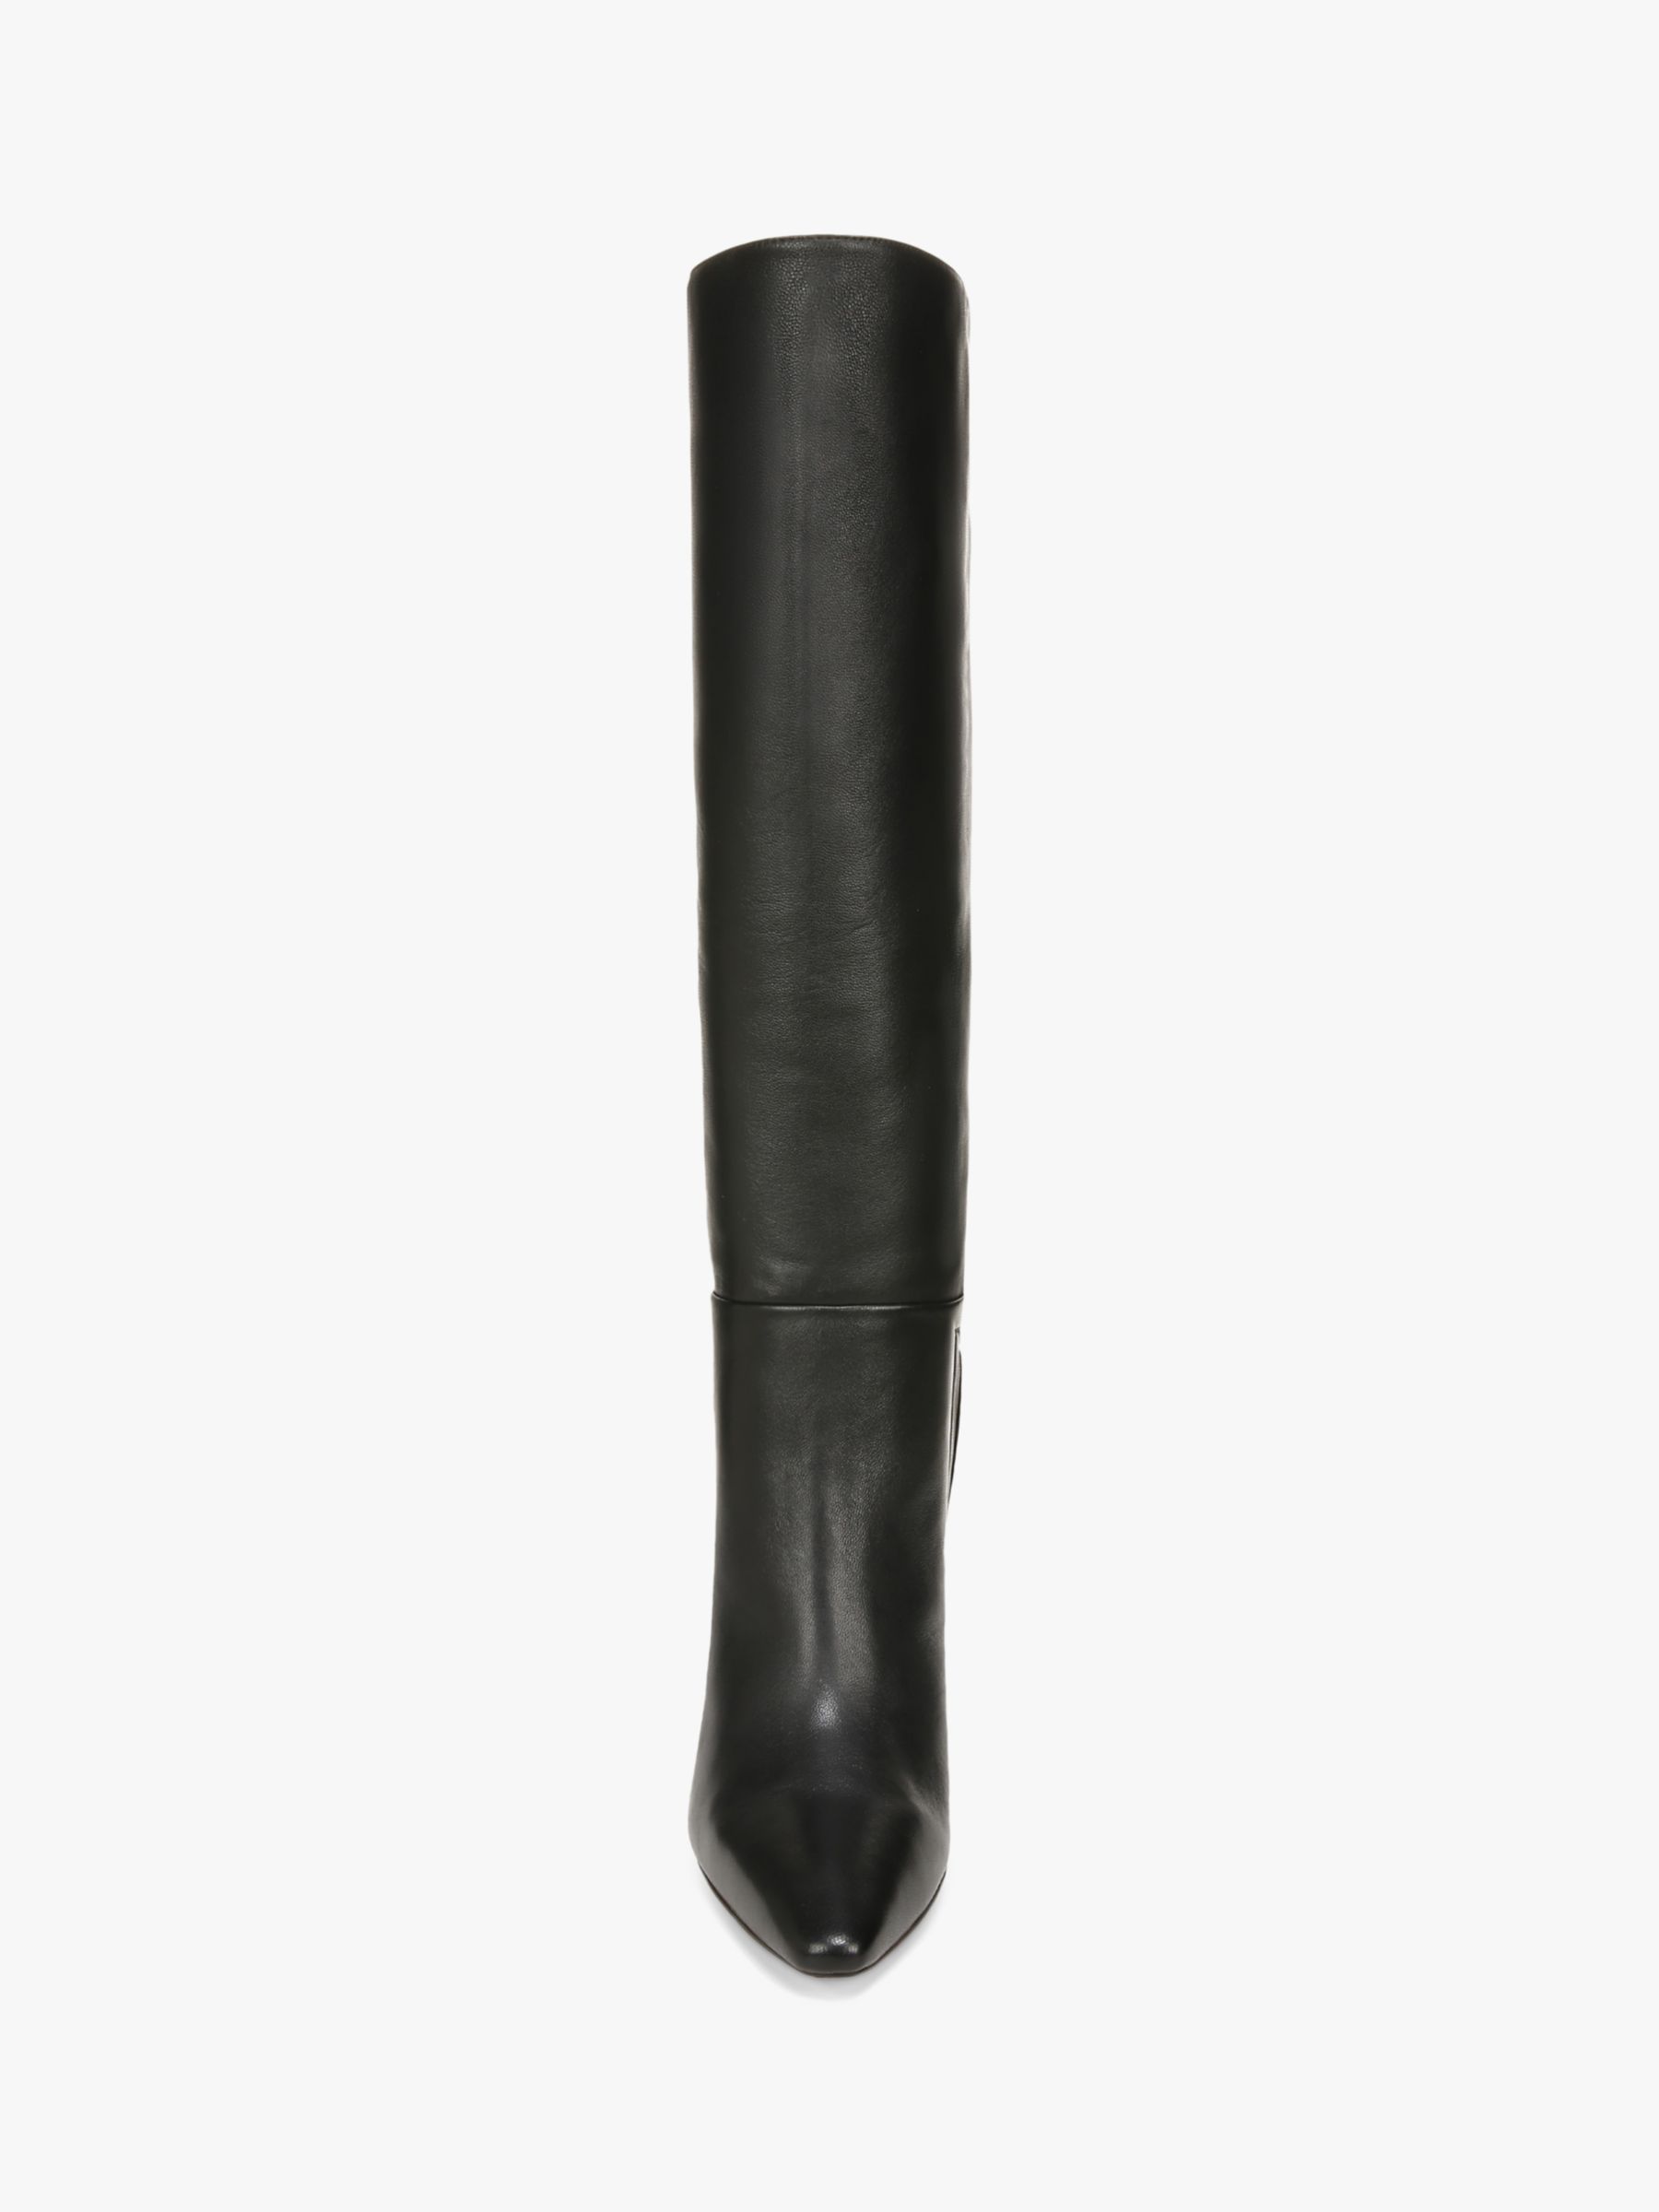 Sam Edelman Vance Knee High Leather Boots, Black, 6.5